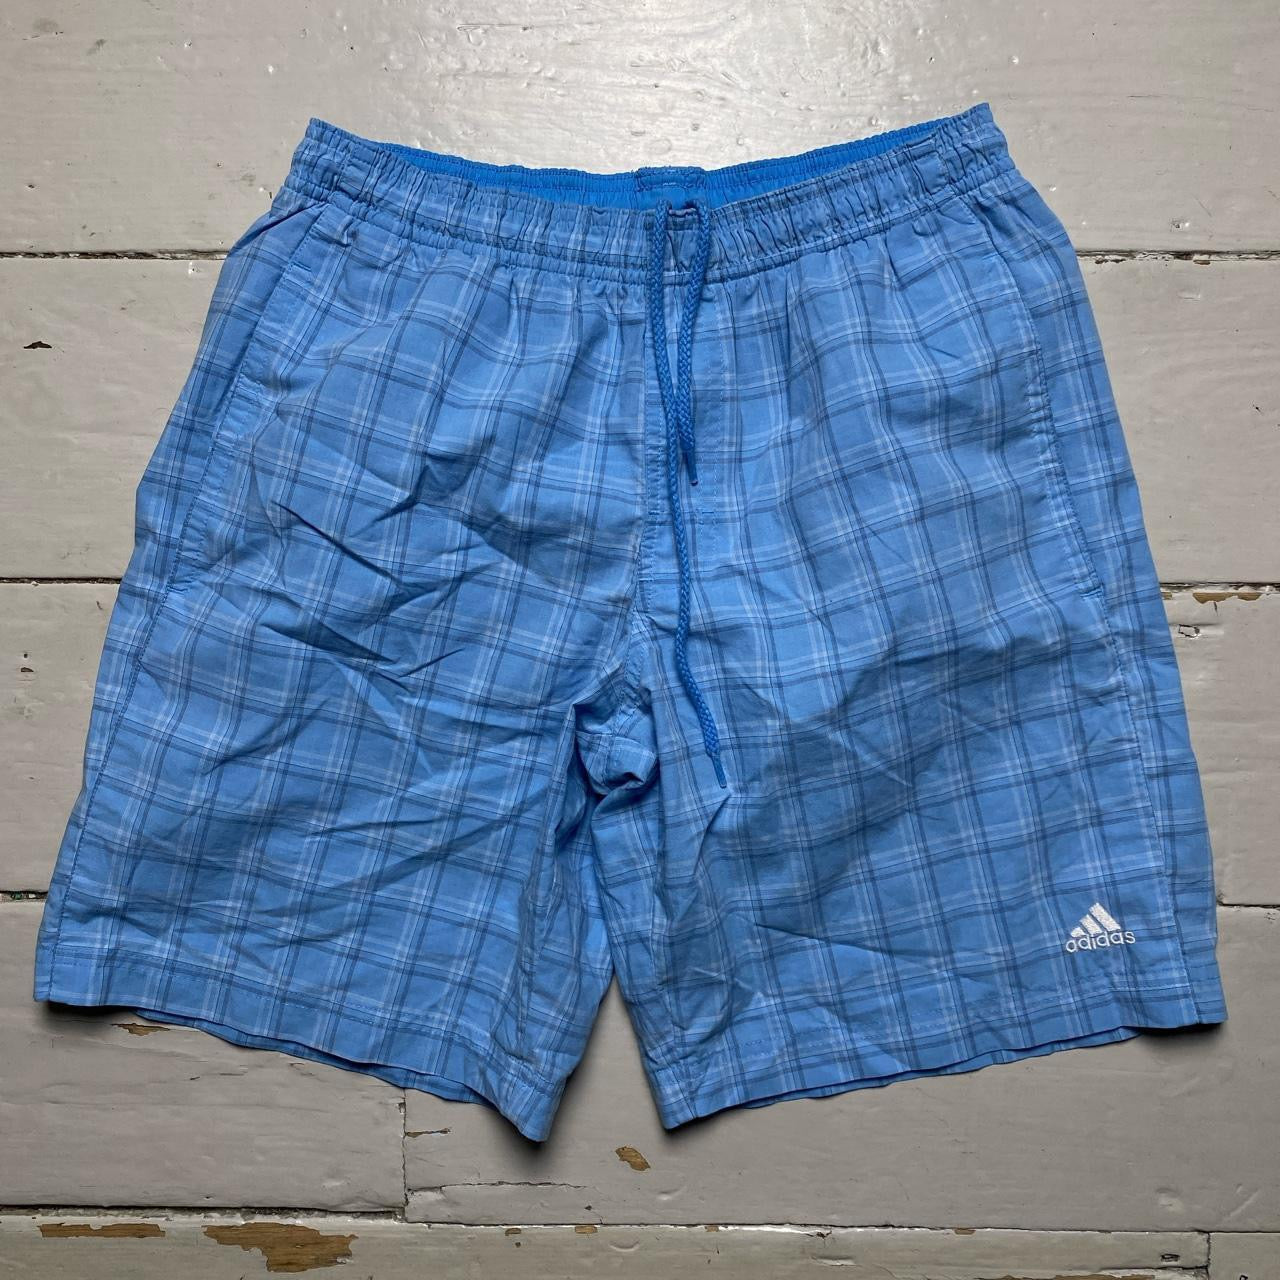 Adidas Vintage Light Blue Shorts (Small)